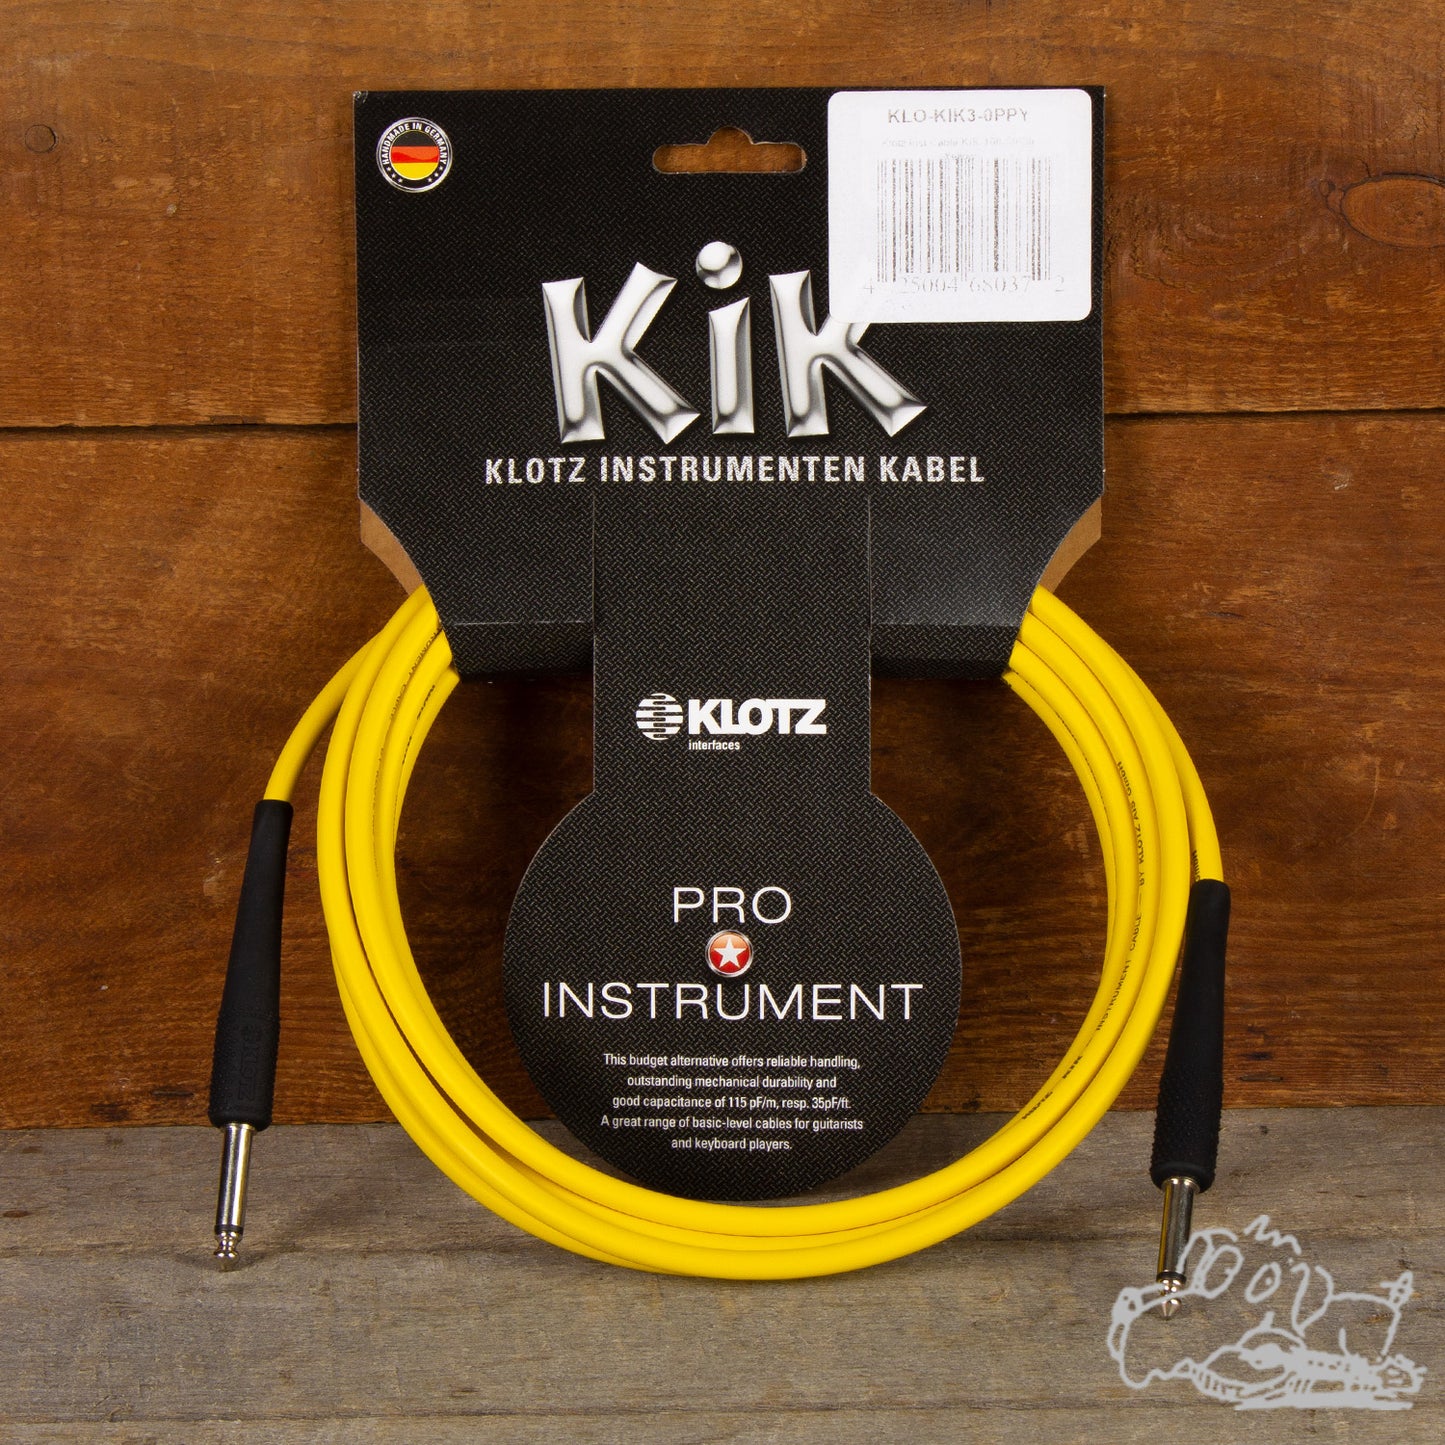 Kik Kolts Instrument Cable